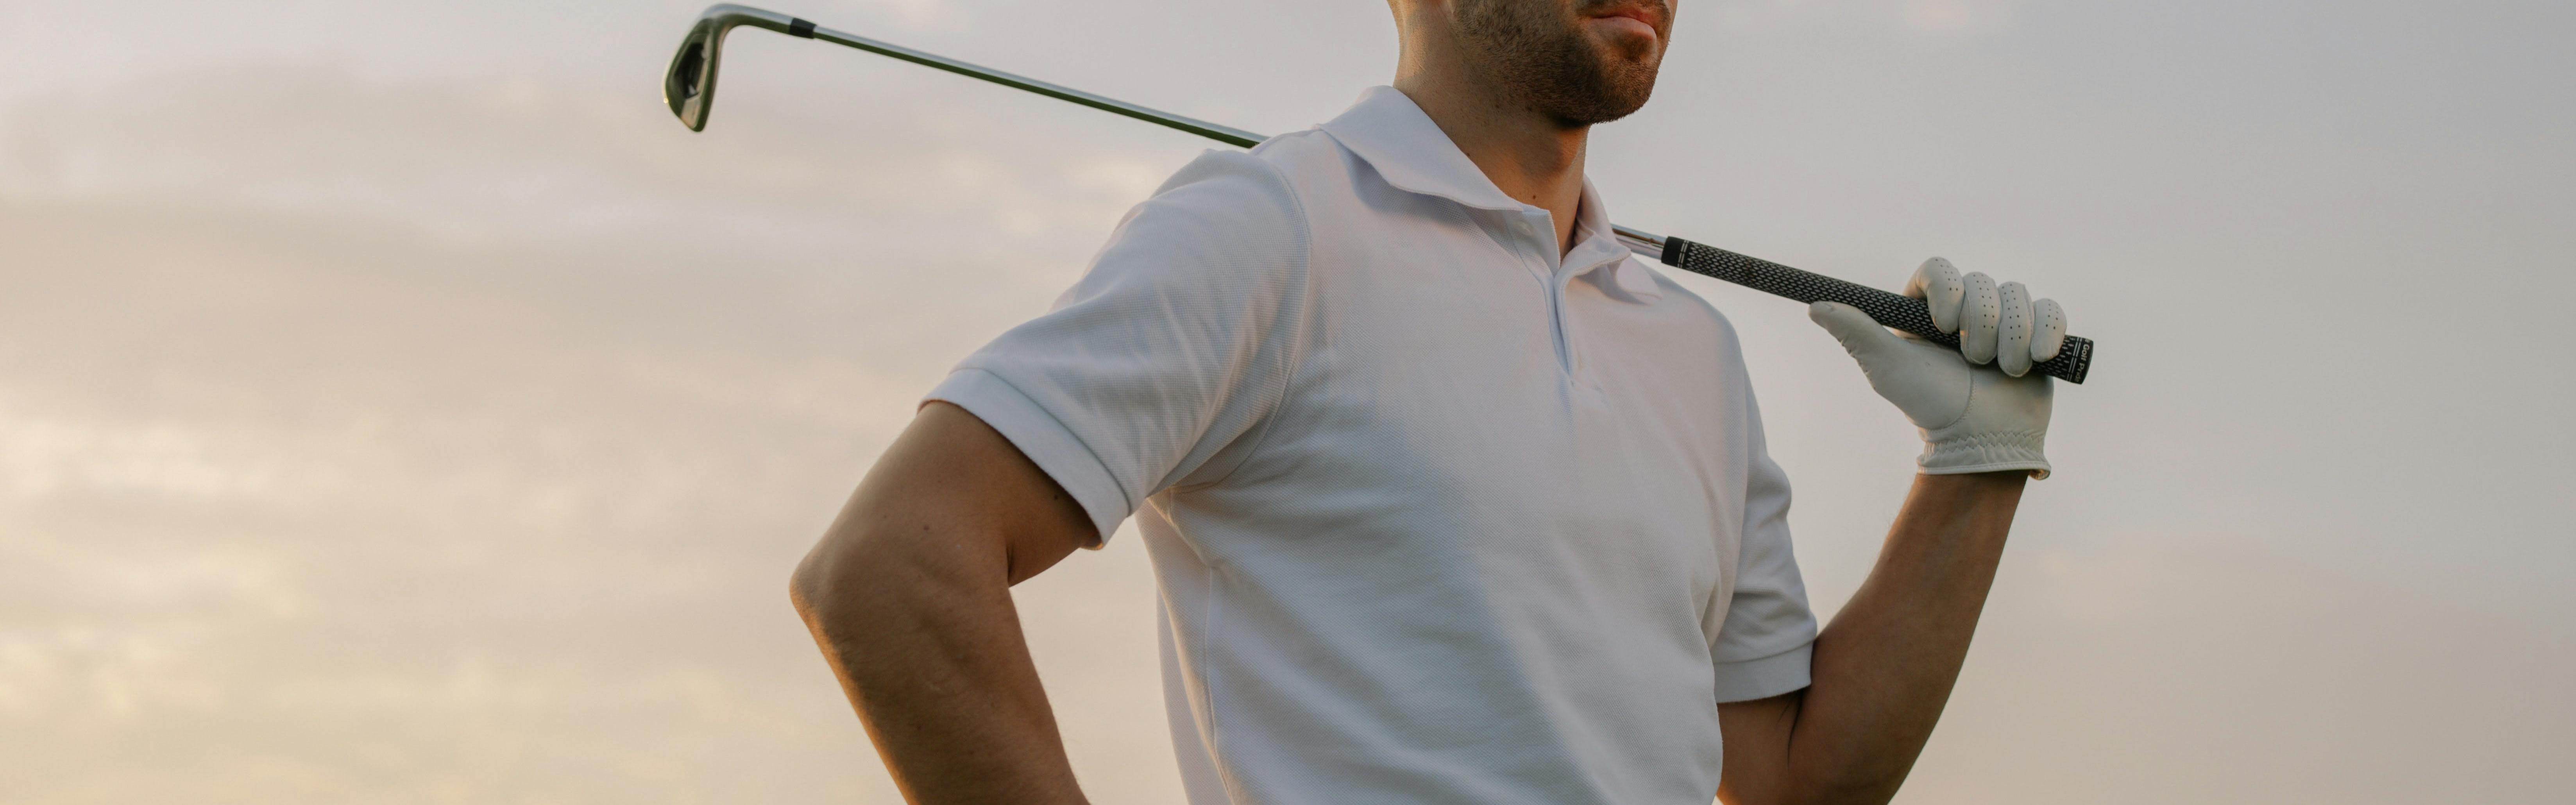 Man wearing a golf shirt and holding a golf club.